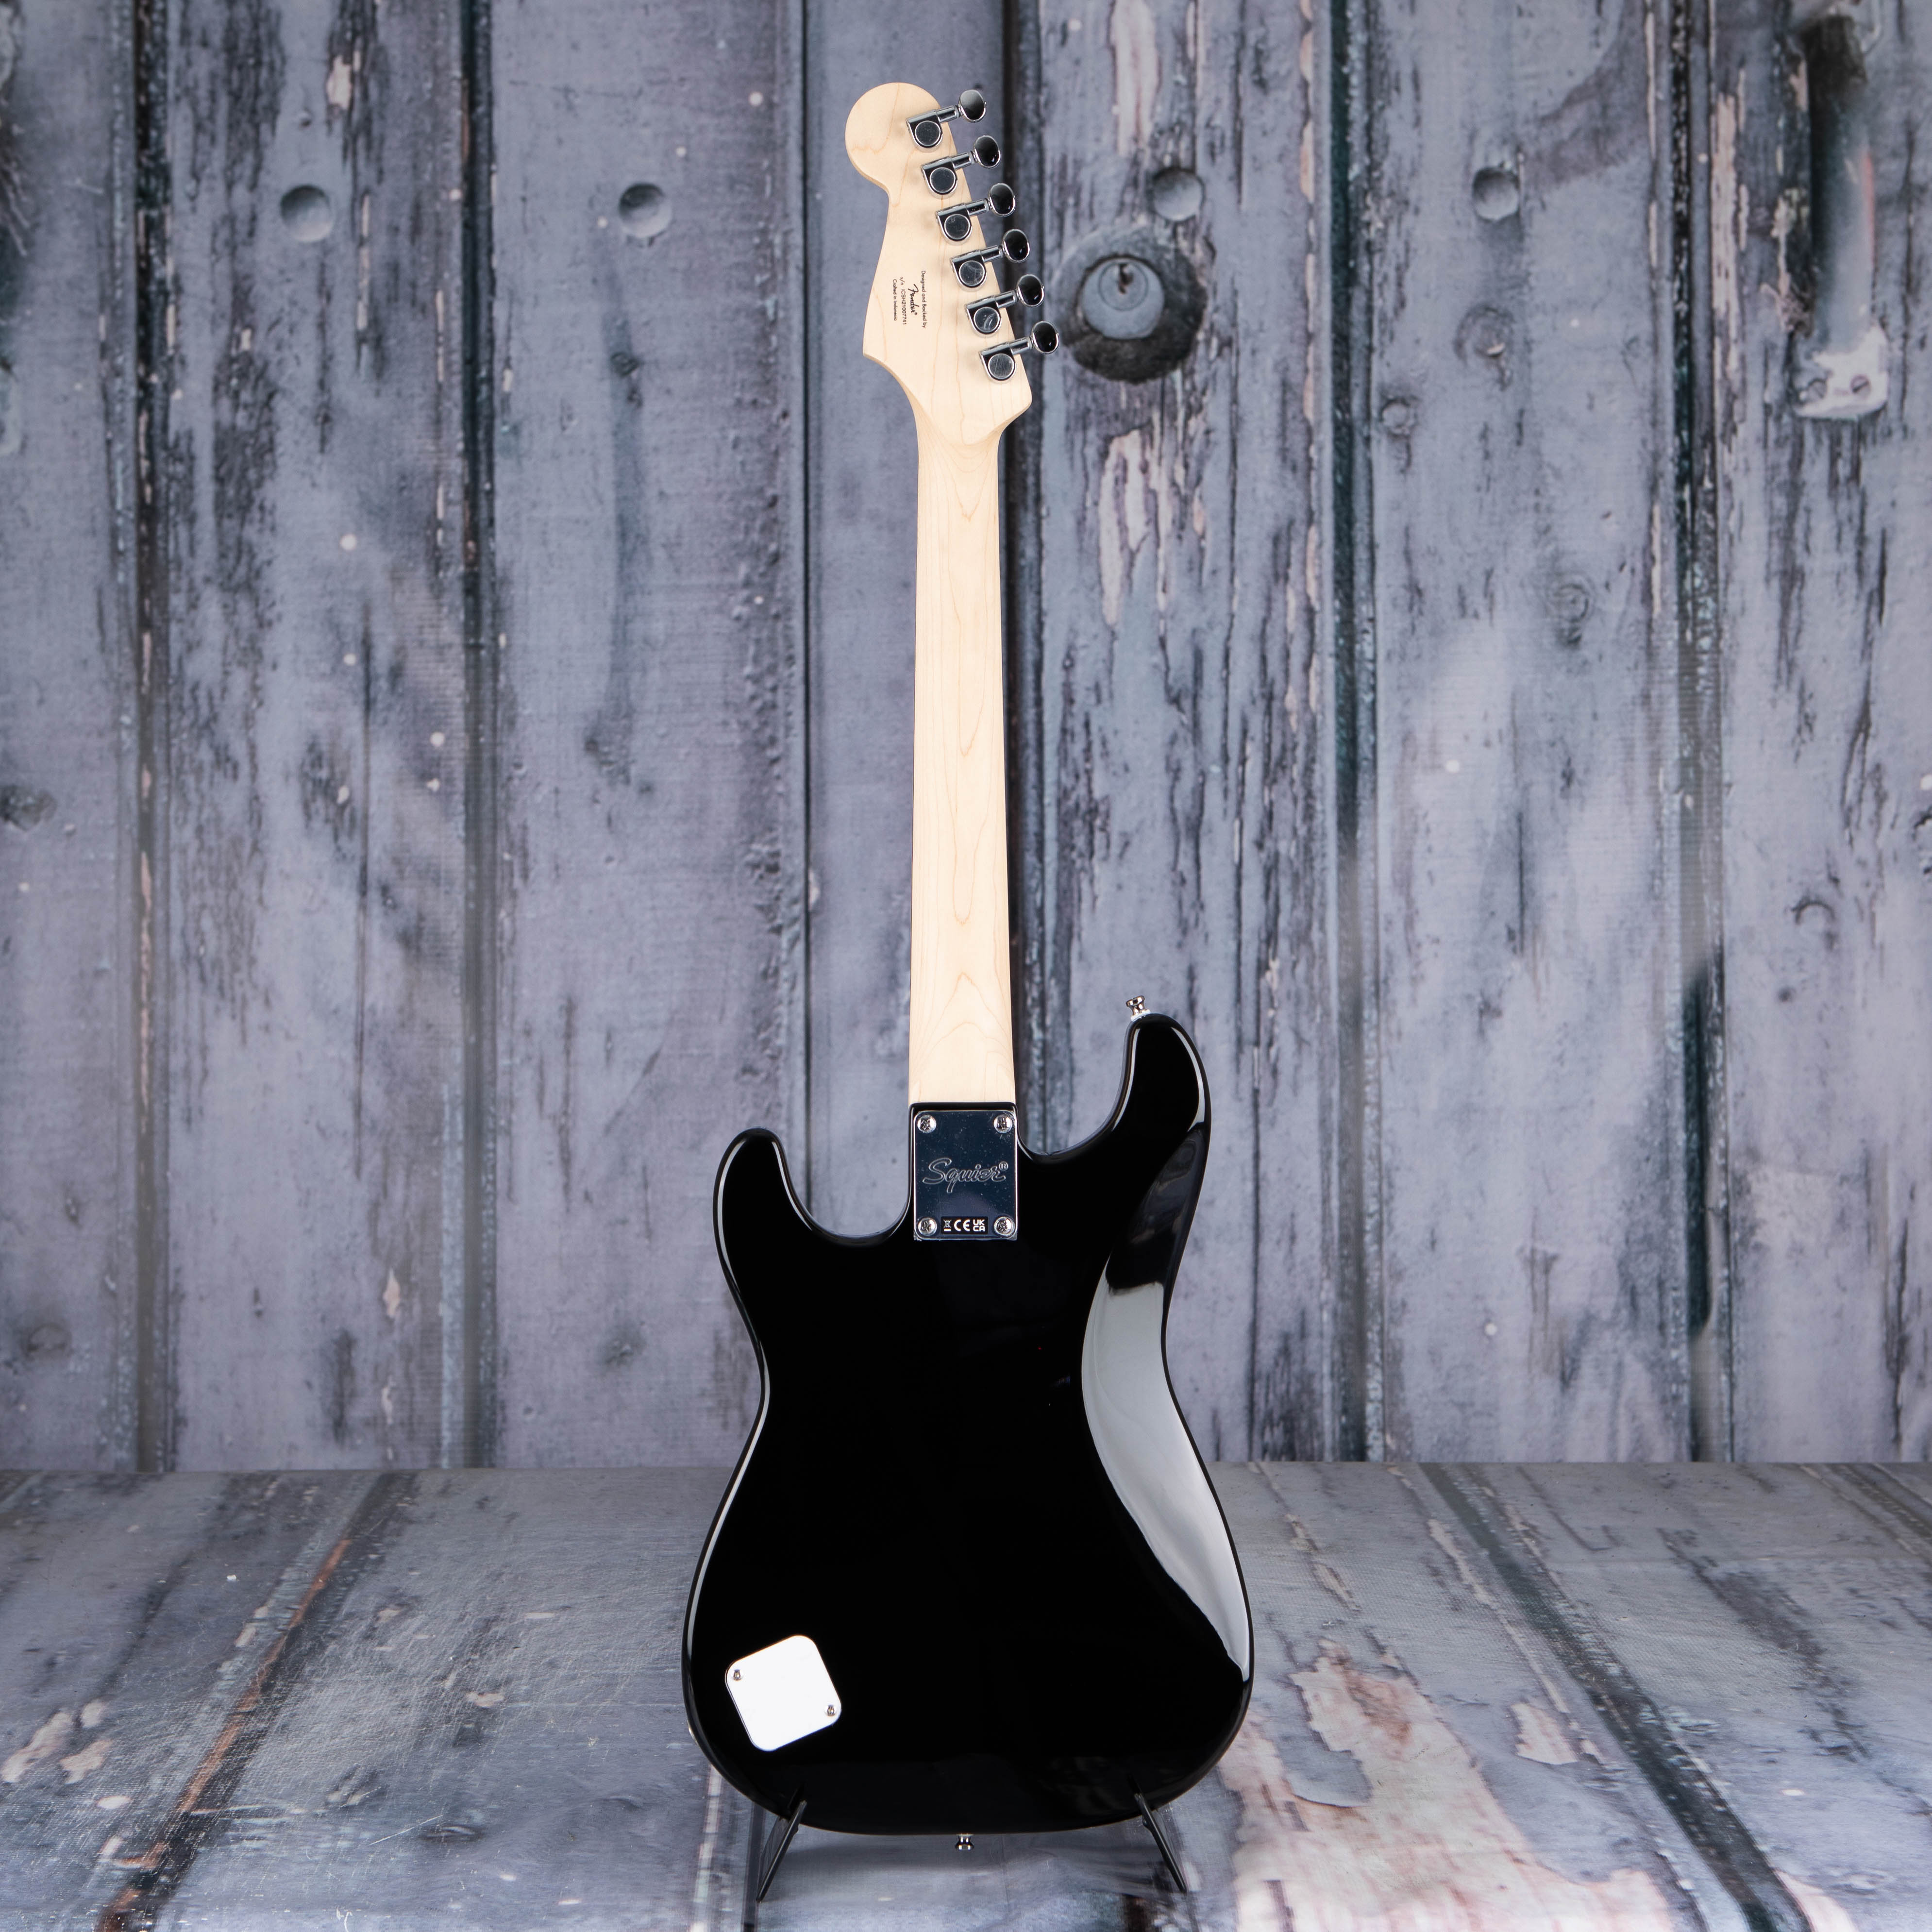 Squier Mini Stratocaster Electric Guitar, Black, back